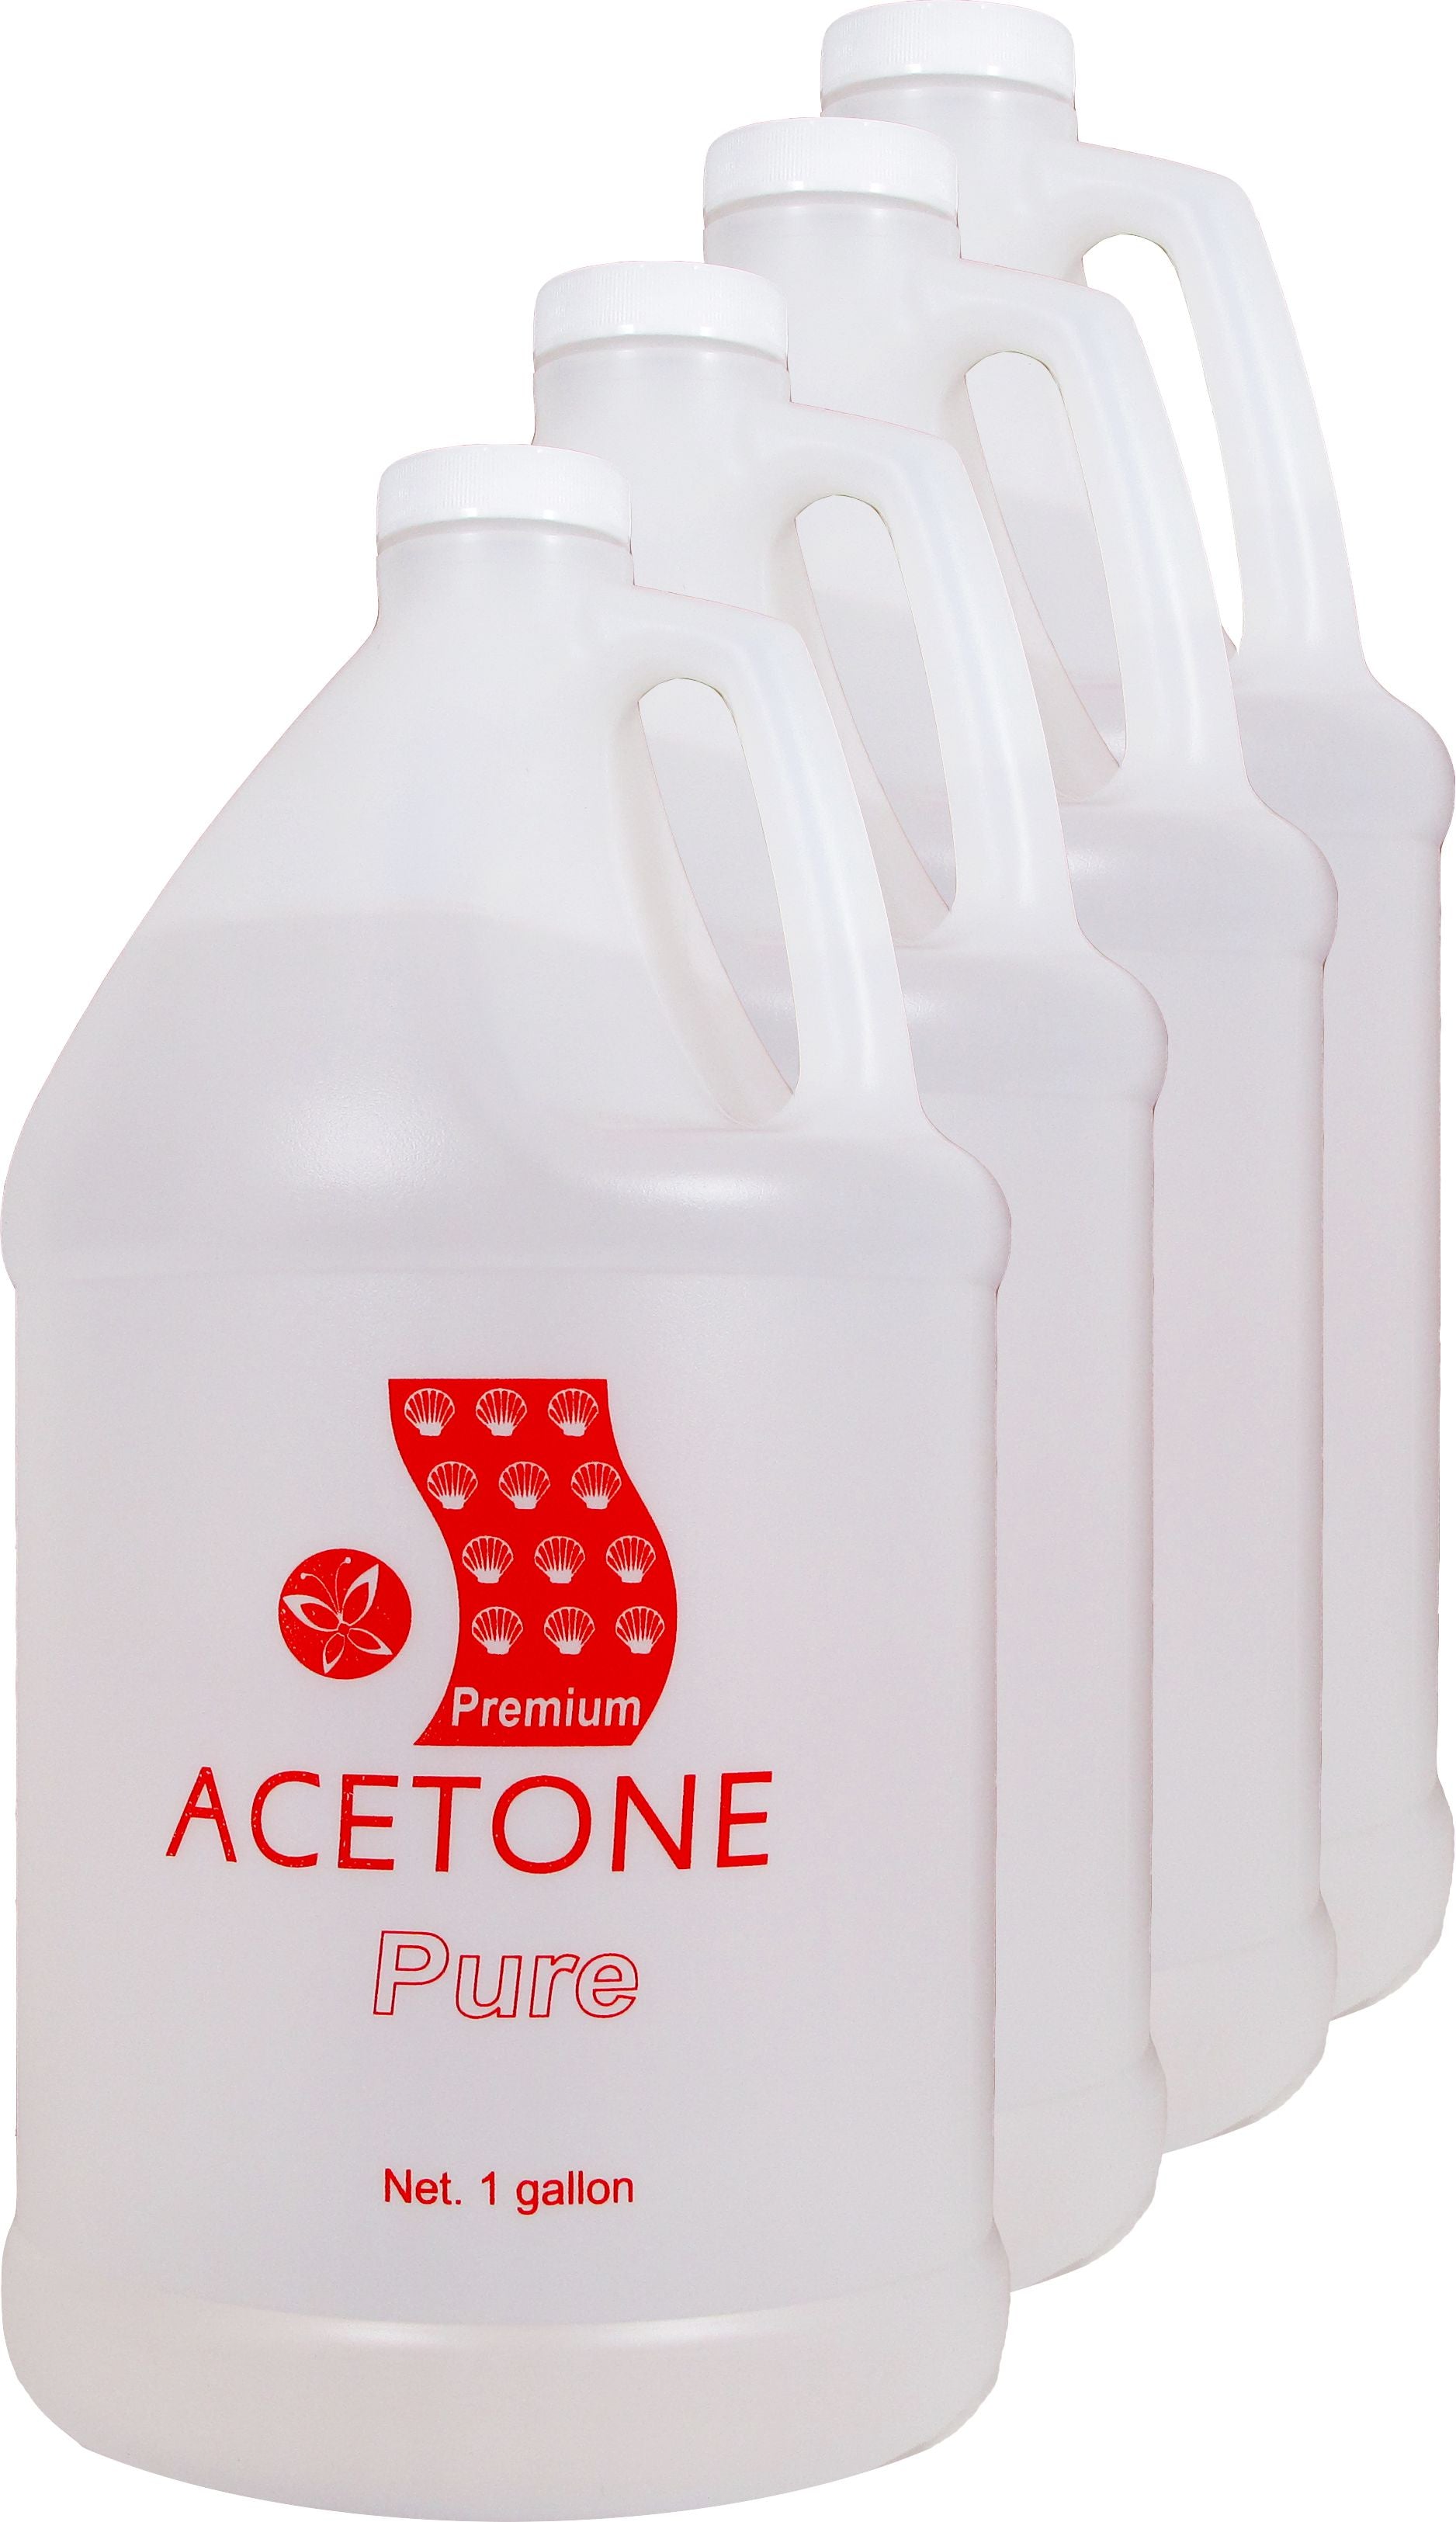 Acetone - 1 Gallon - ULINE - Qty of 4 - S-25036